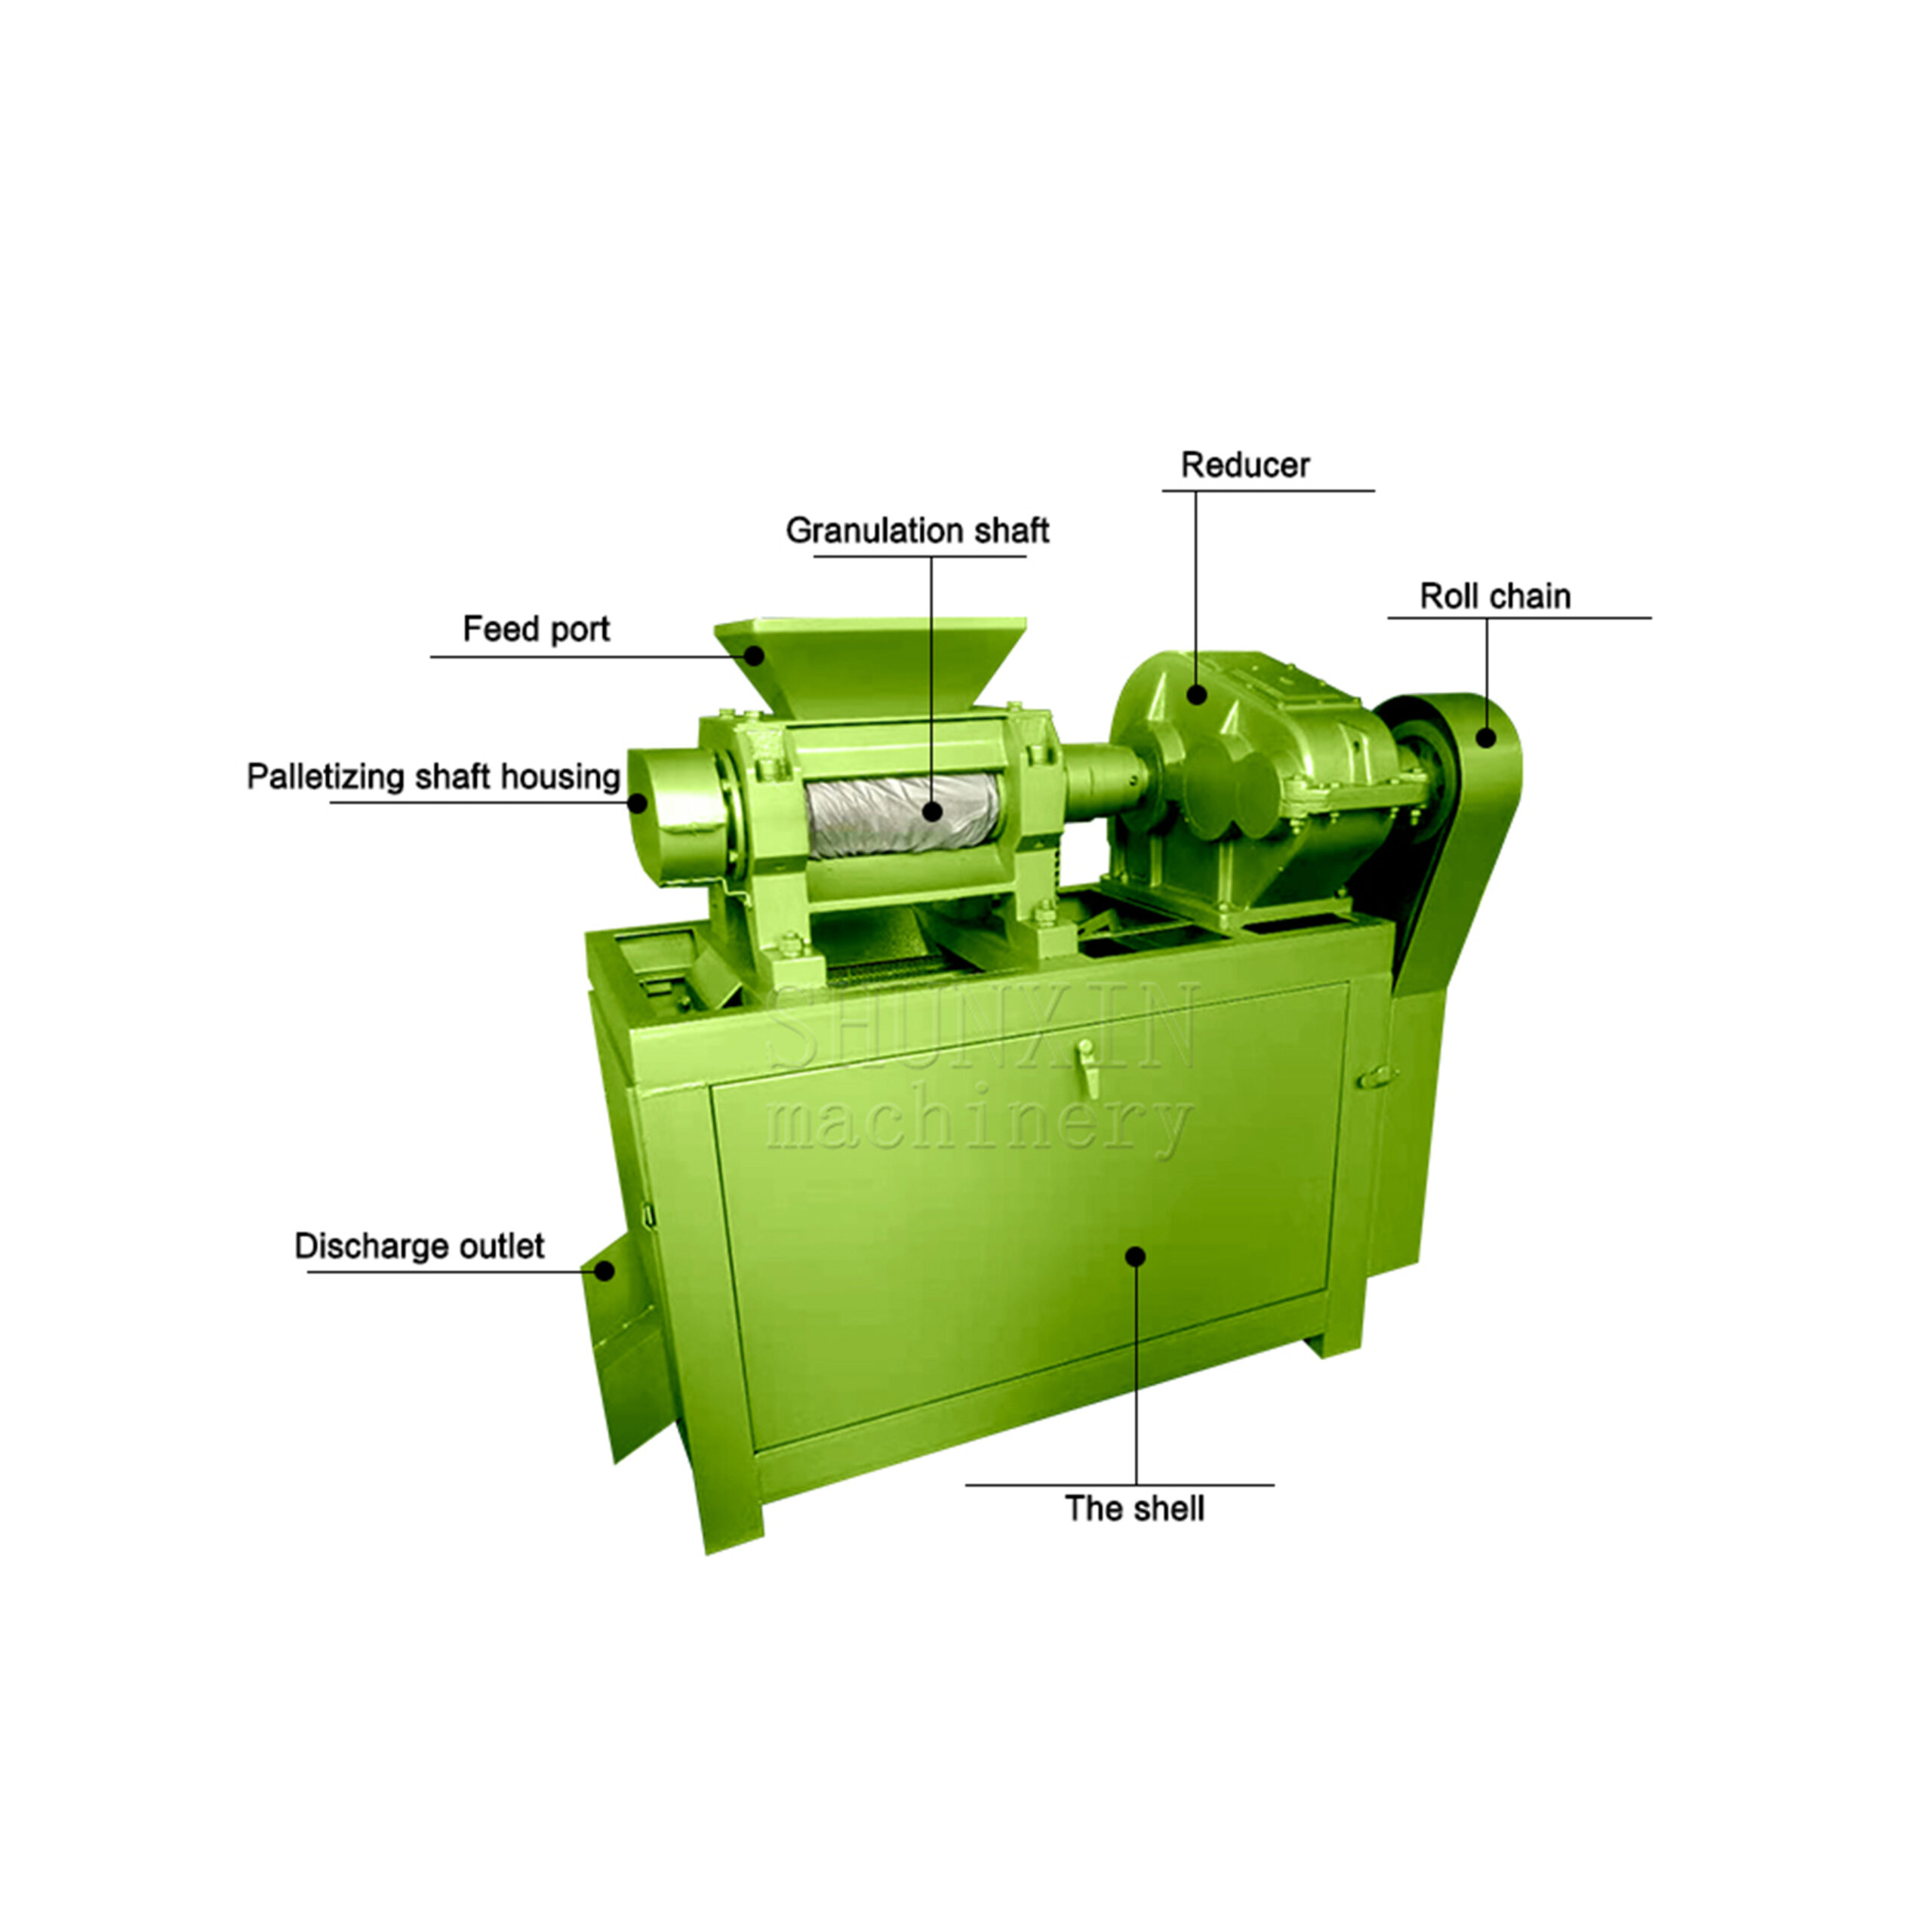 The design of roller press granulator